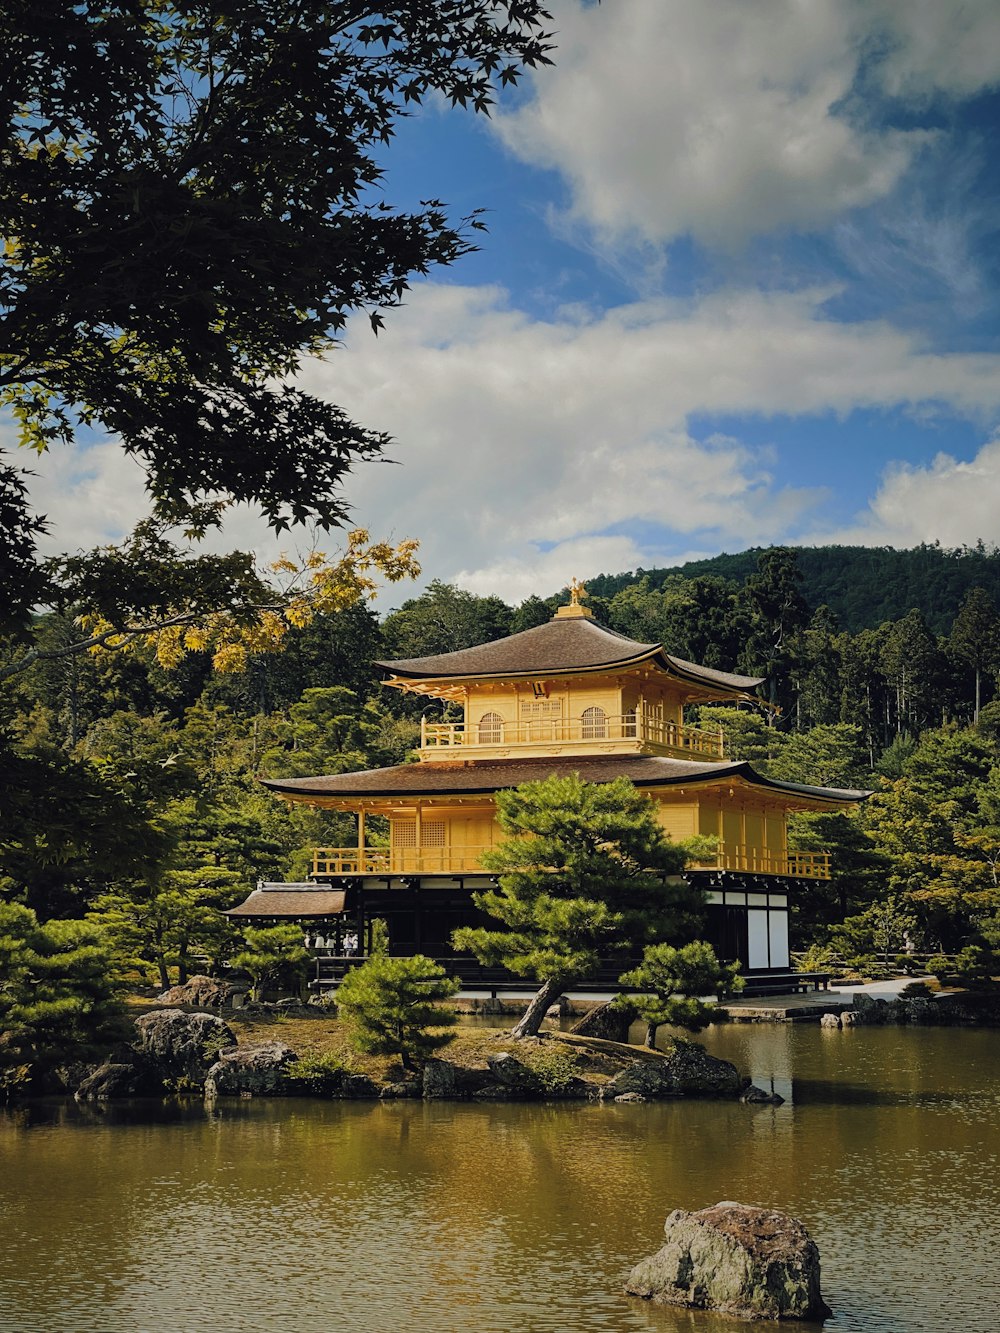 Kinkaku-ji on a hill by a body of water